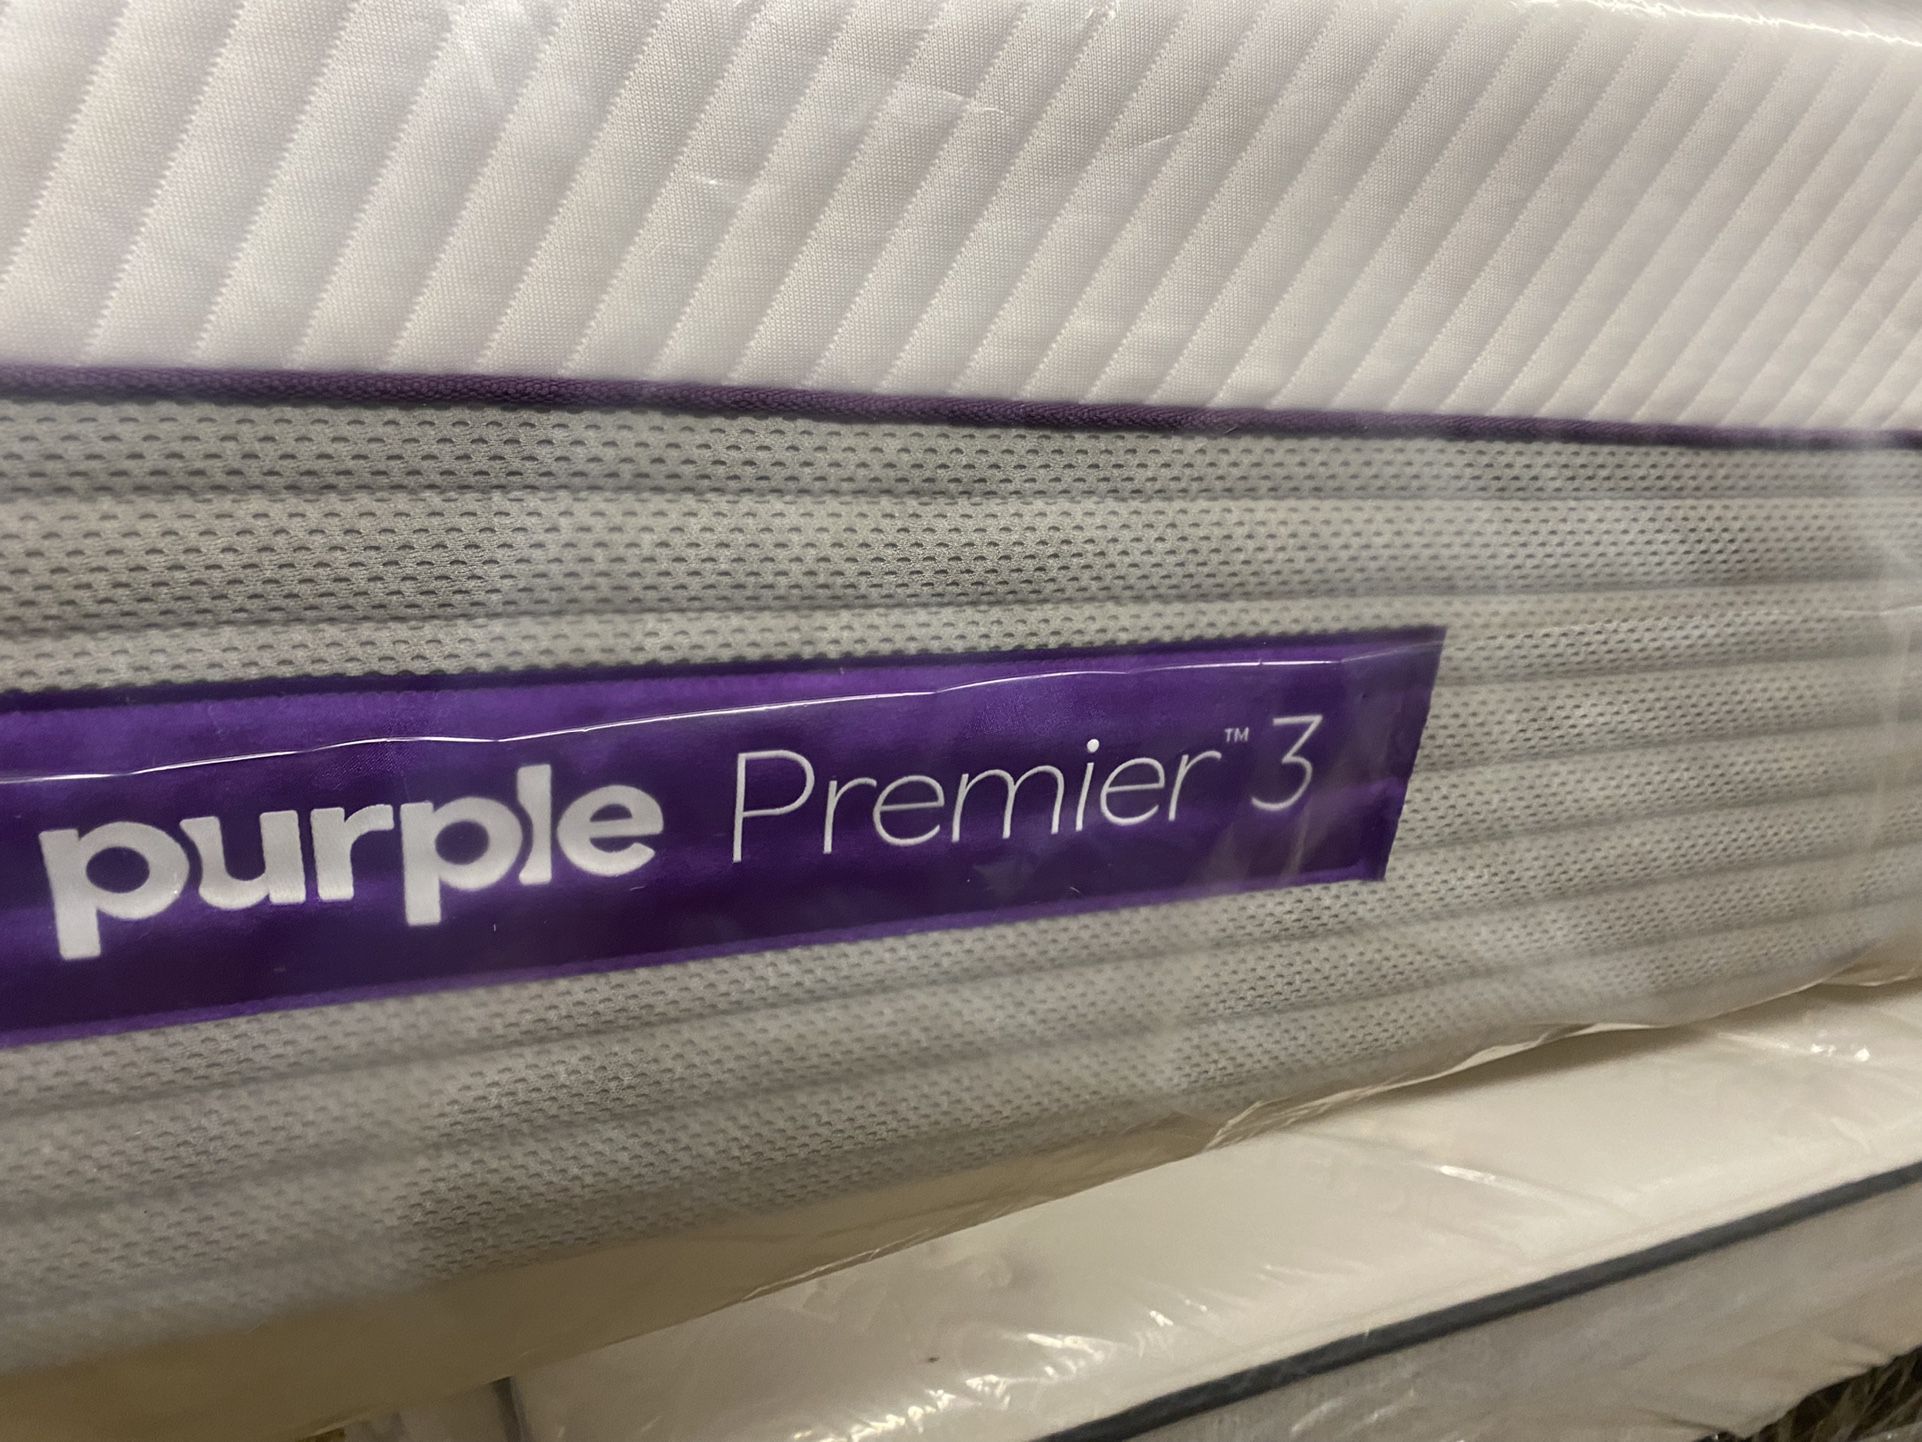 Purple Premier 3 king Size Brand King 